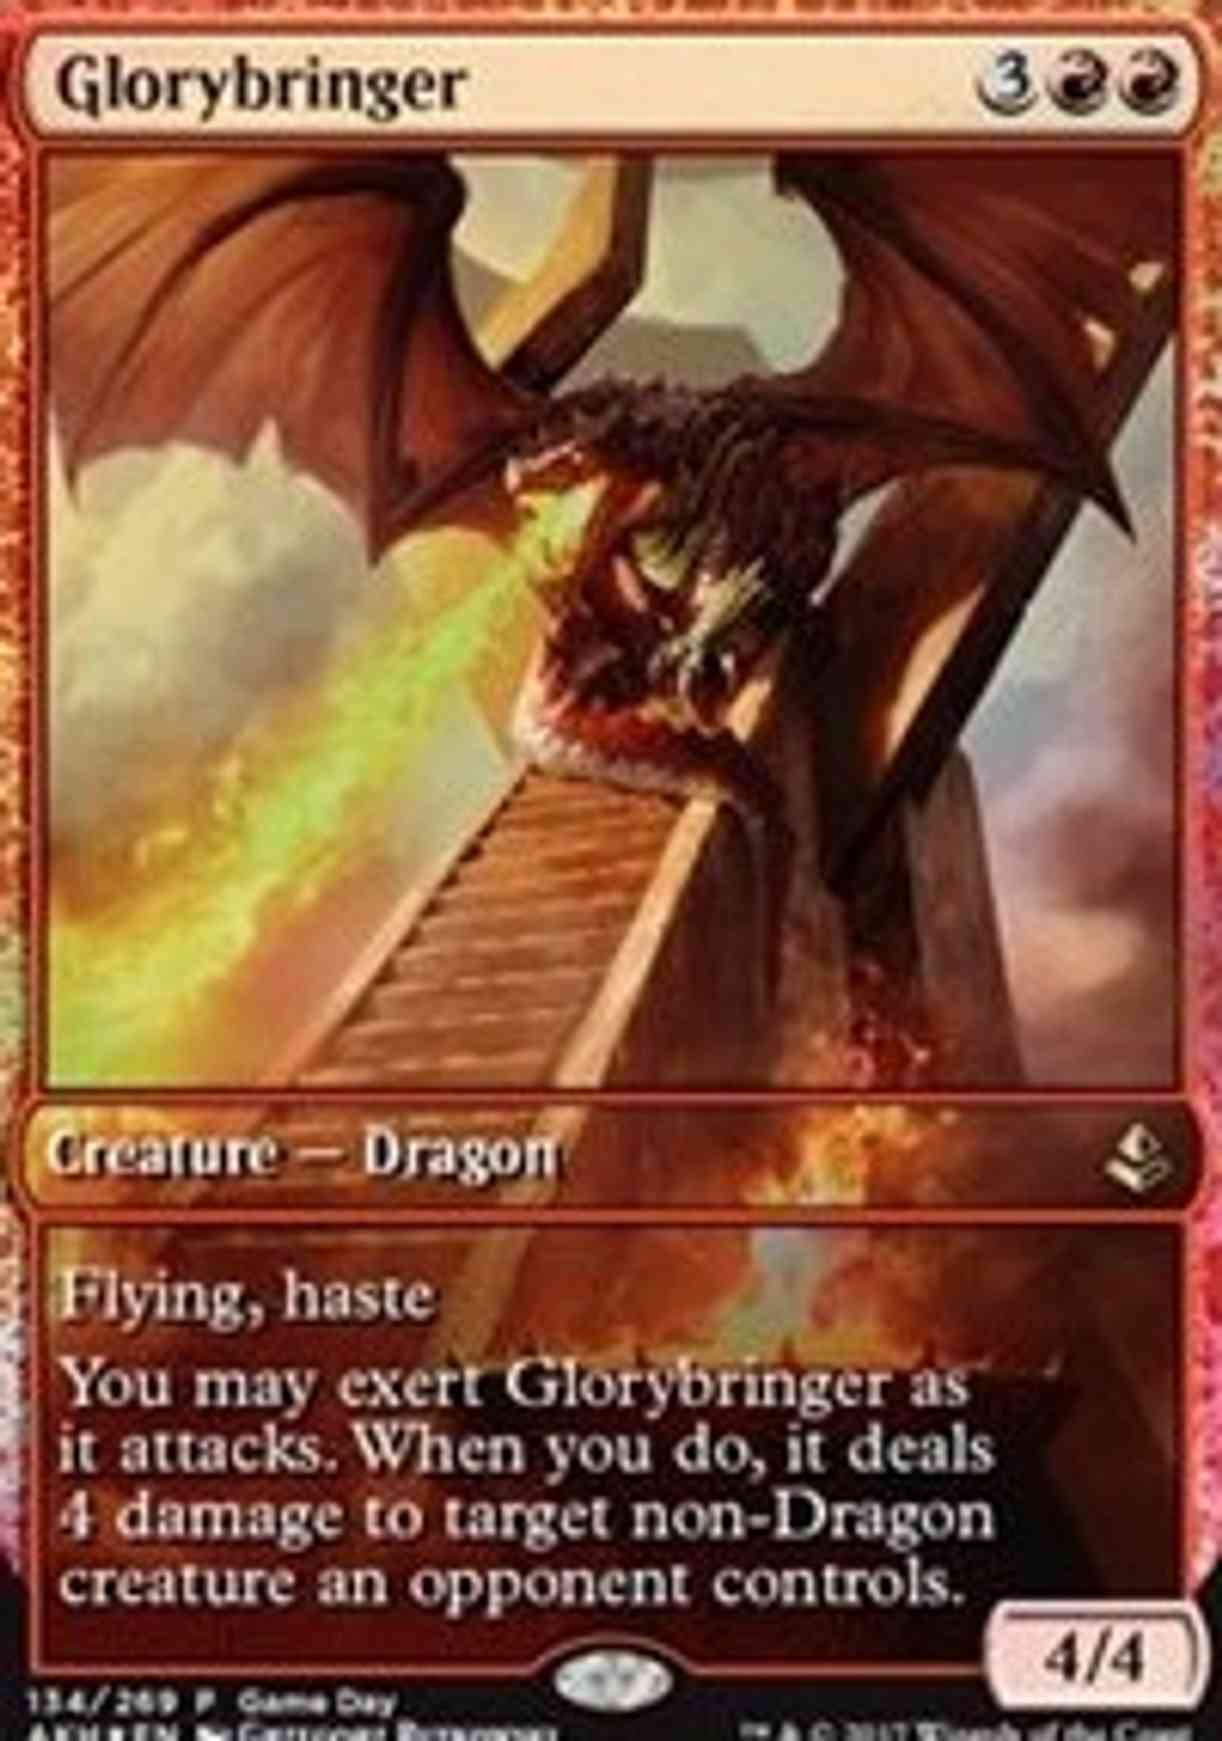 Glorybringer magic card front